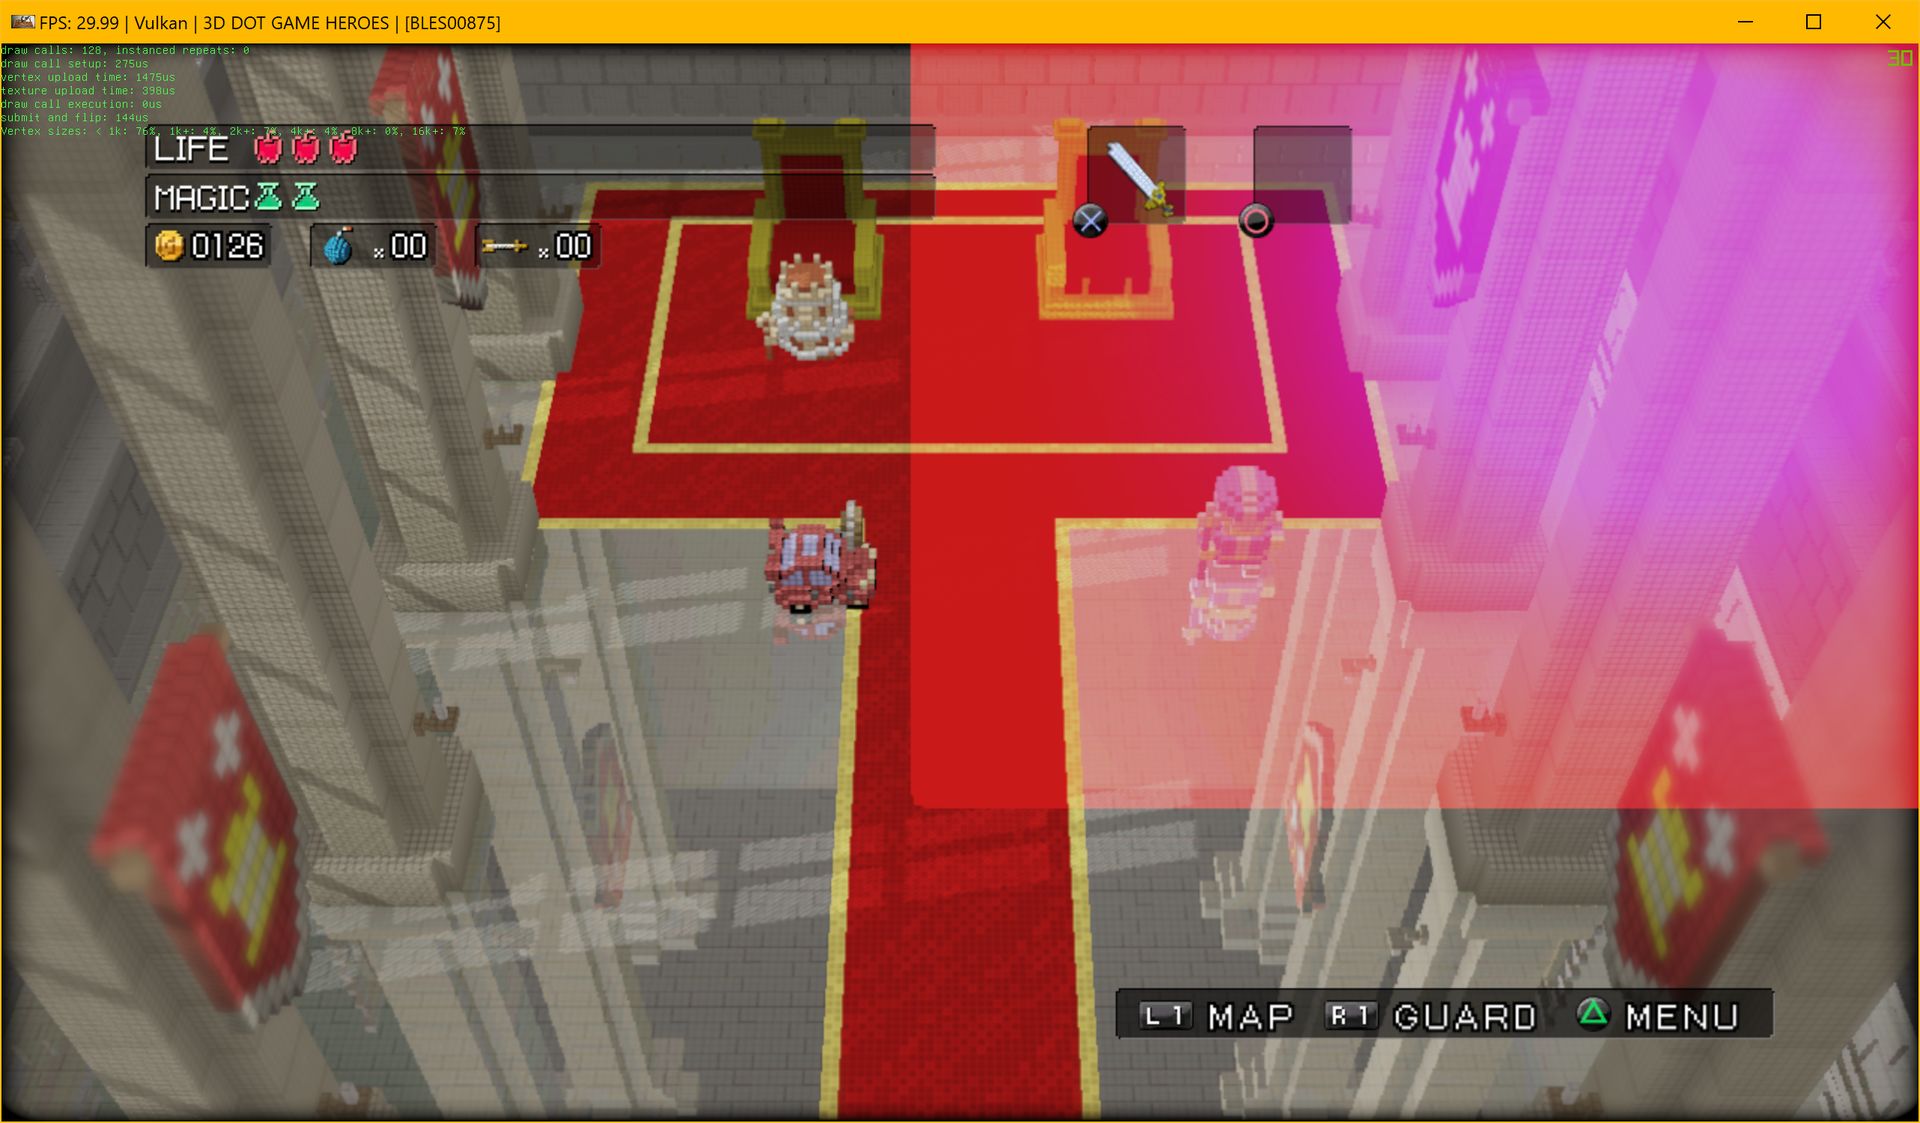 Skate 3 RPCS3 PS3 Emulator: Running speed/flash glitch + tutorial - All fps  tested 